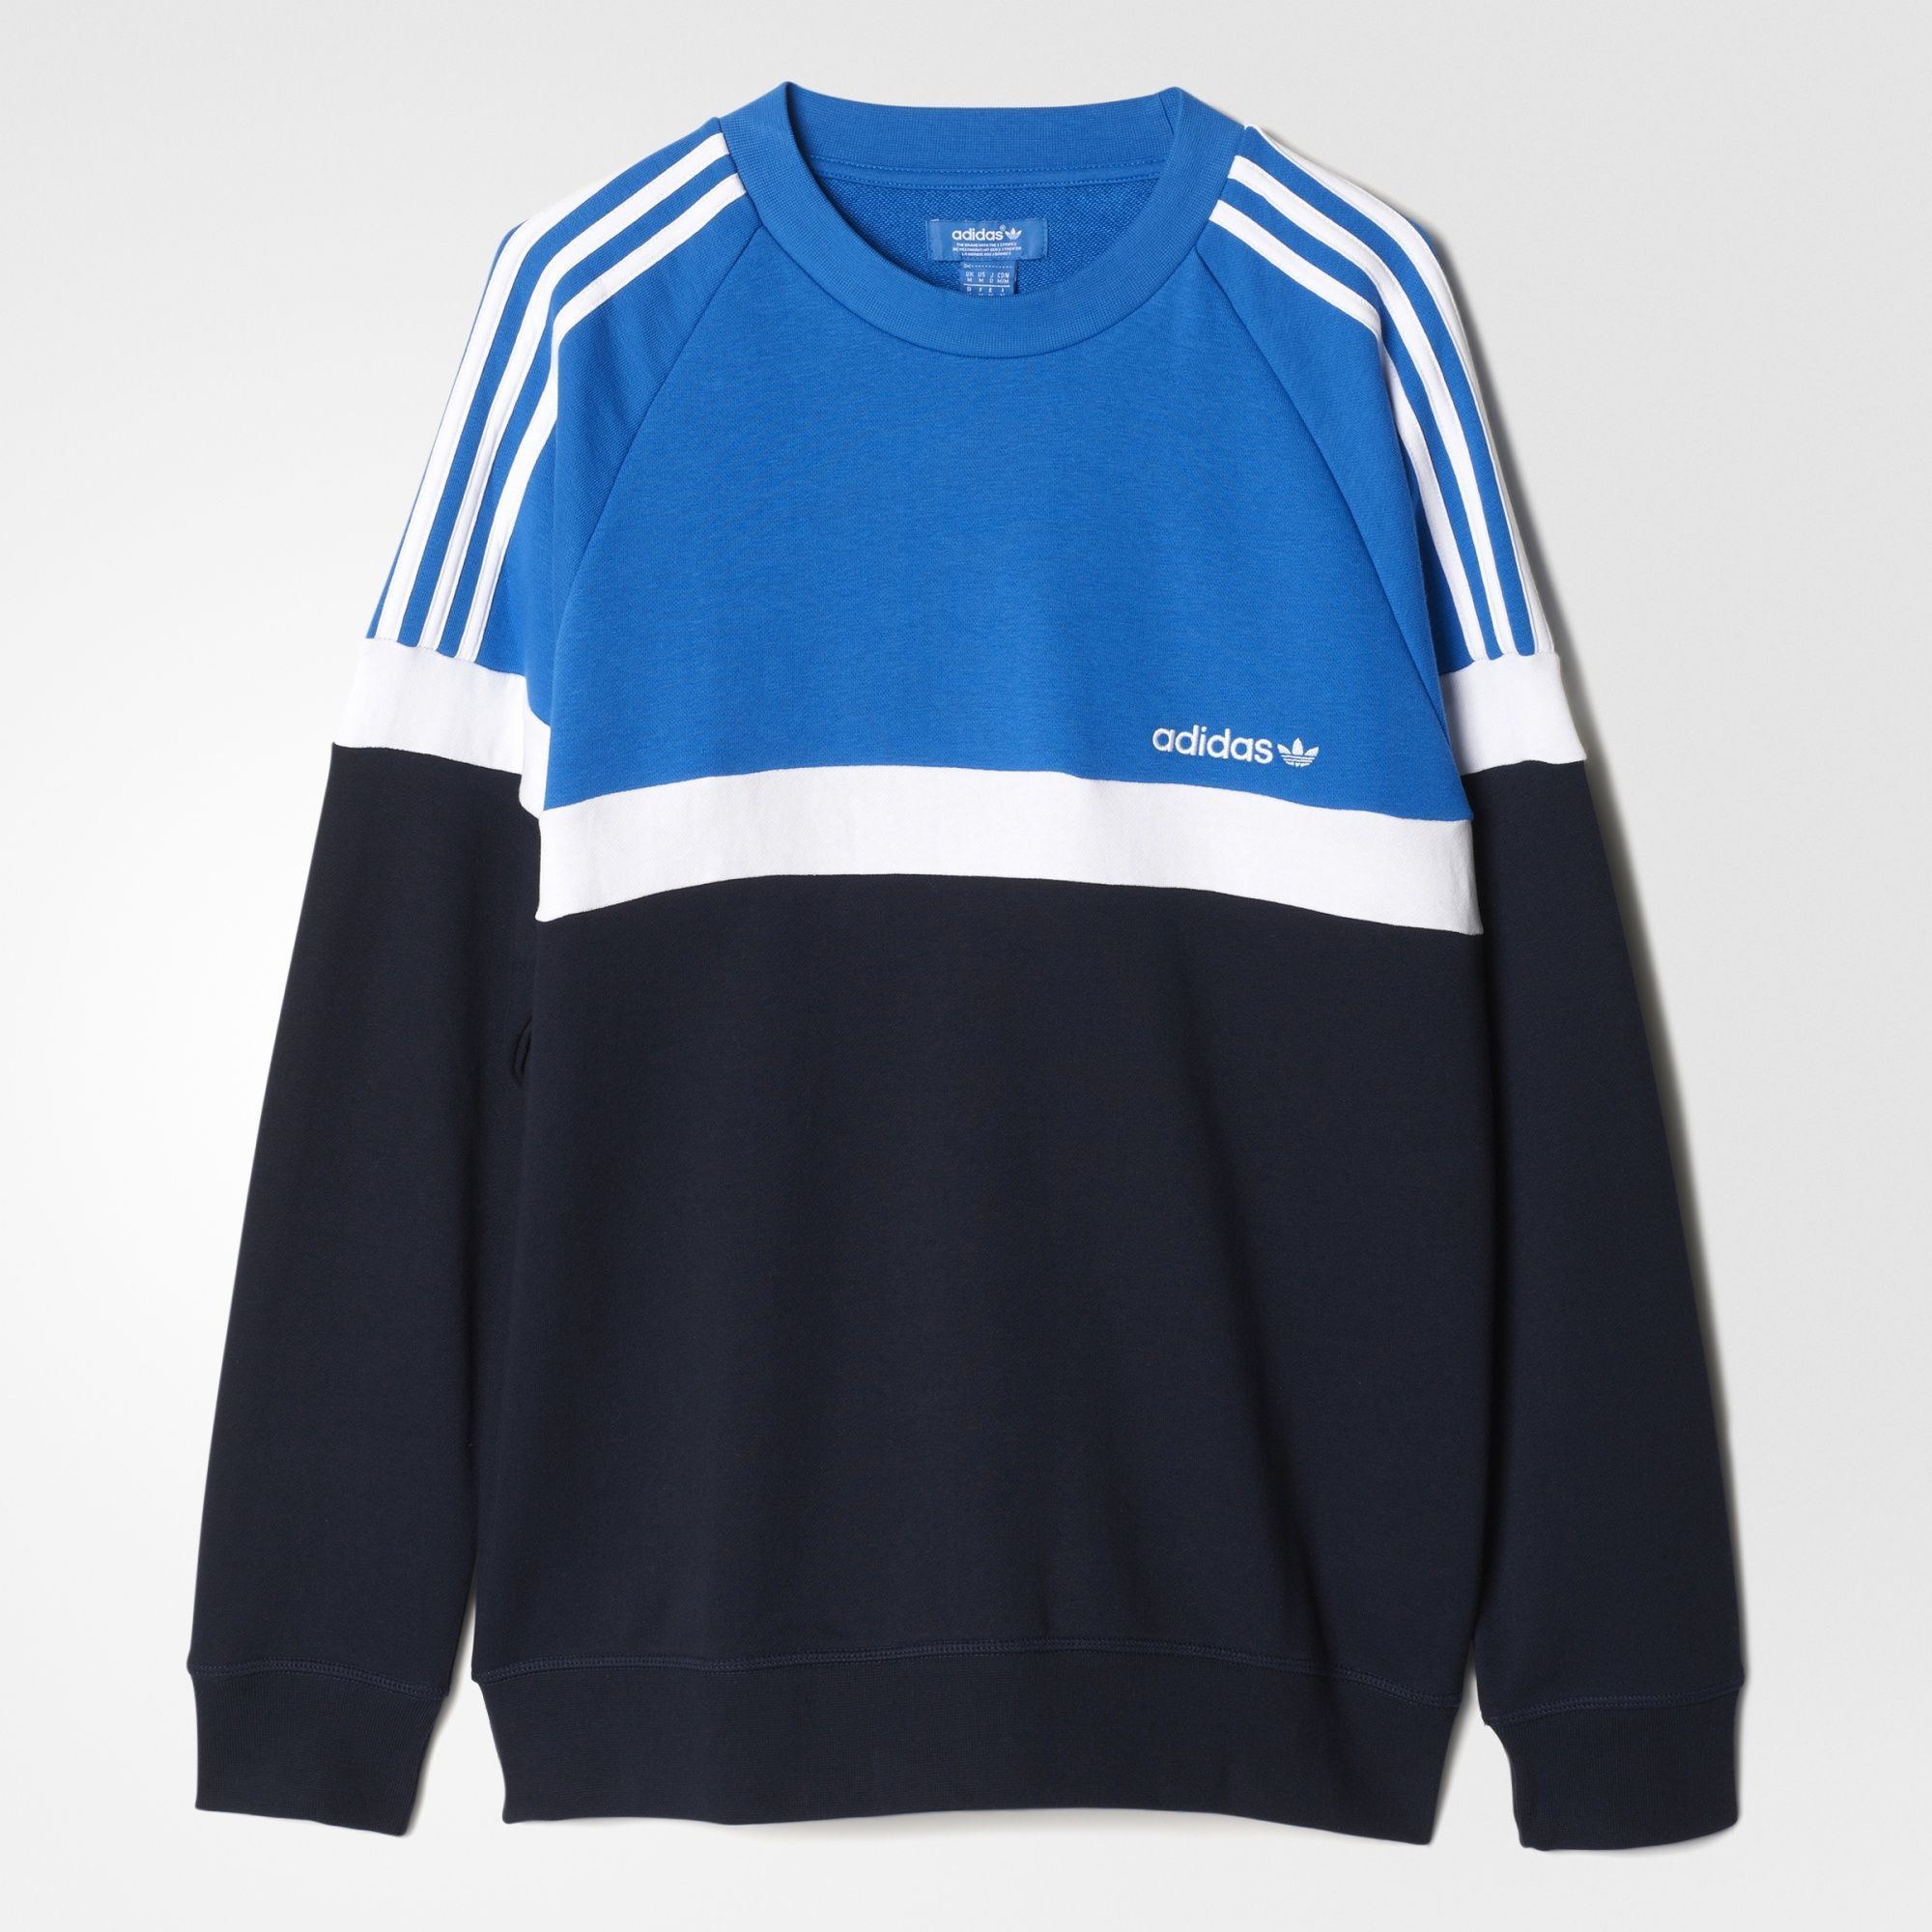 adidas originals blue sweater